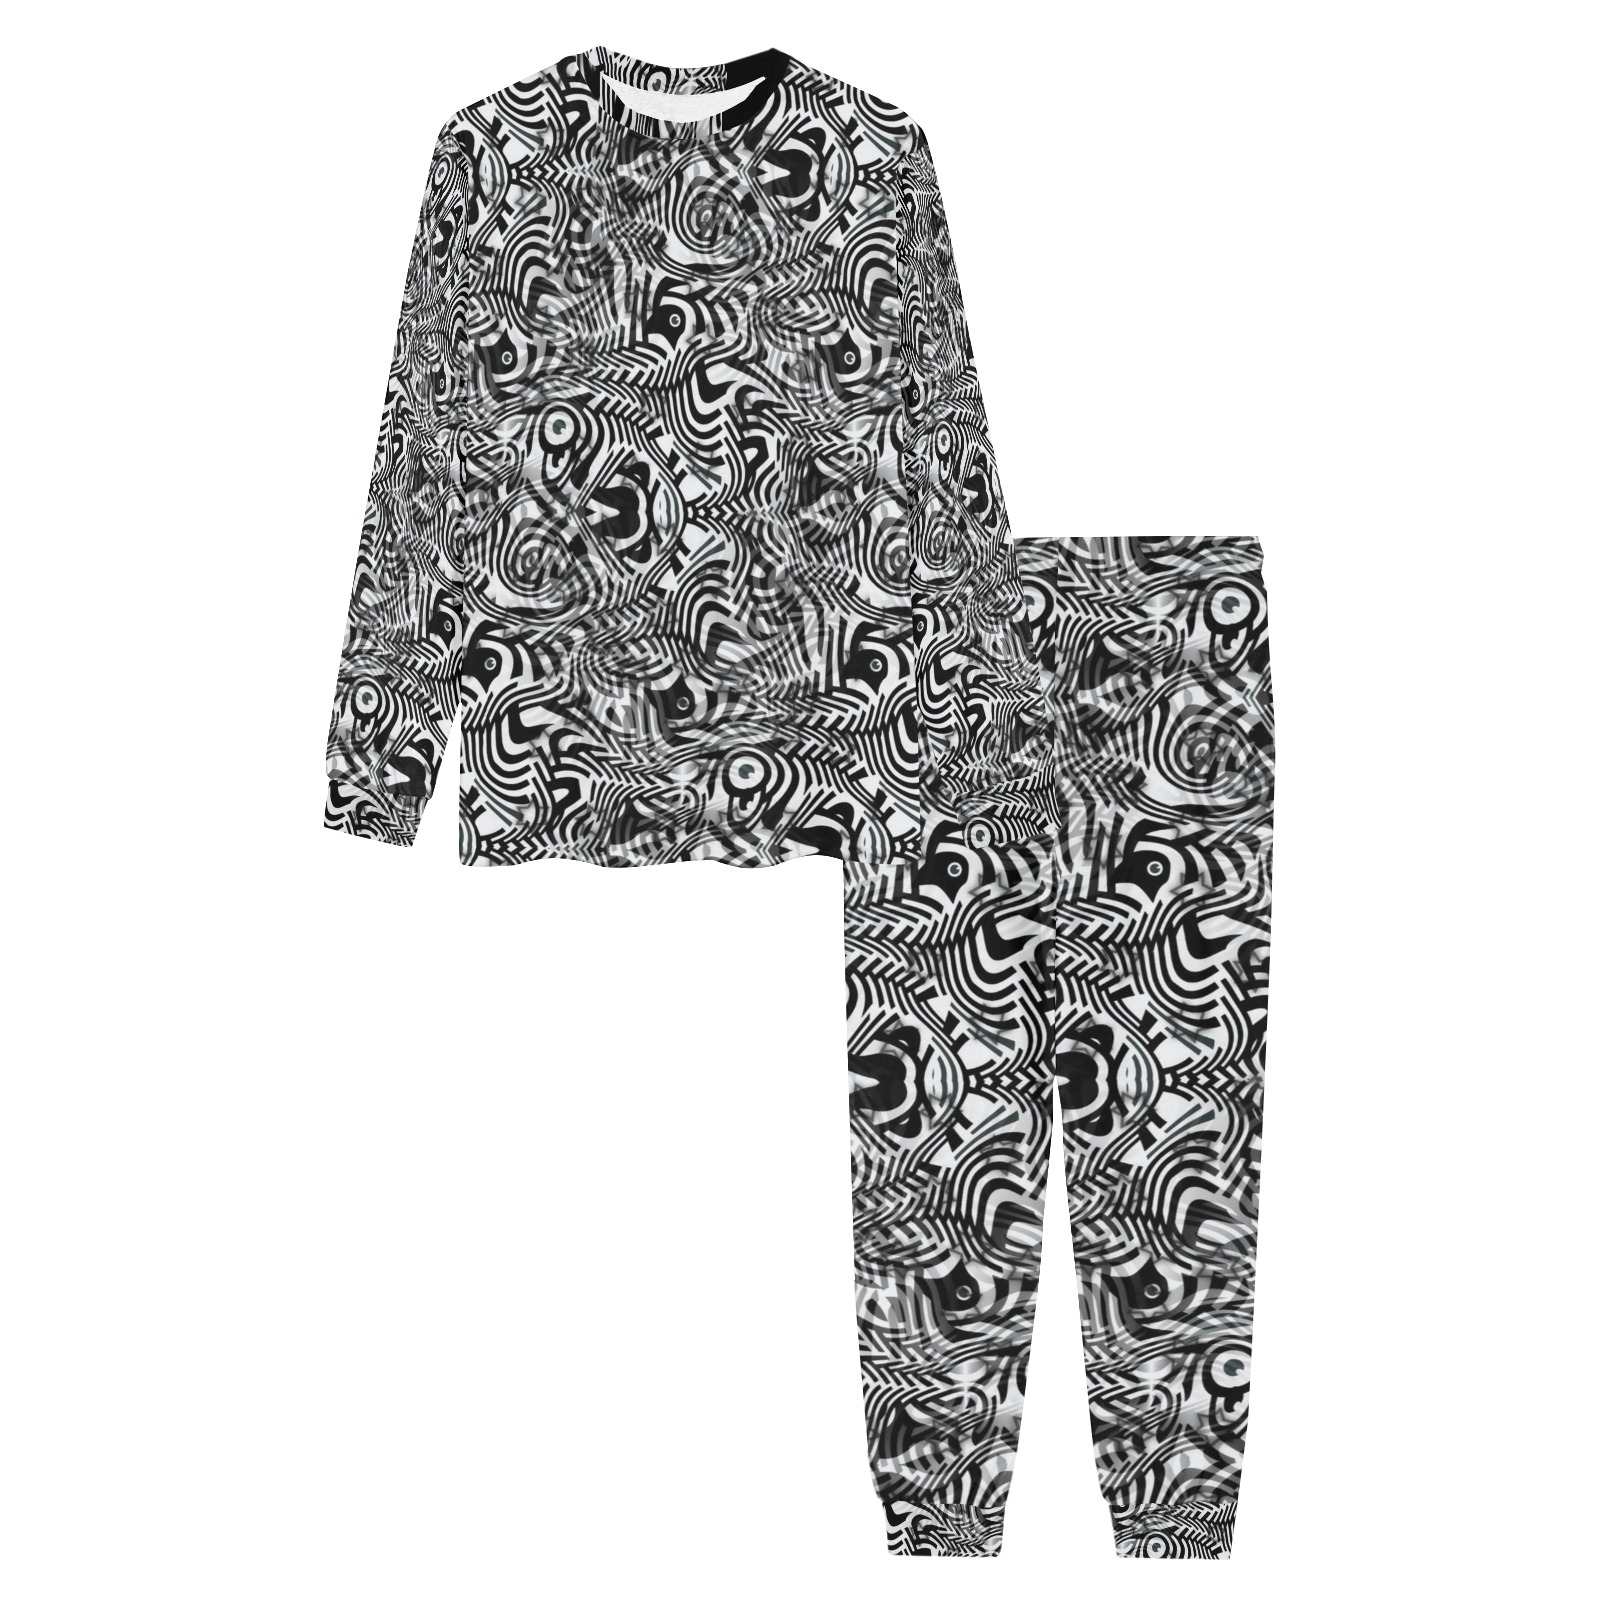 Zebra by Artdream Men's All Over Print Pajama Set with Custom Cuff